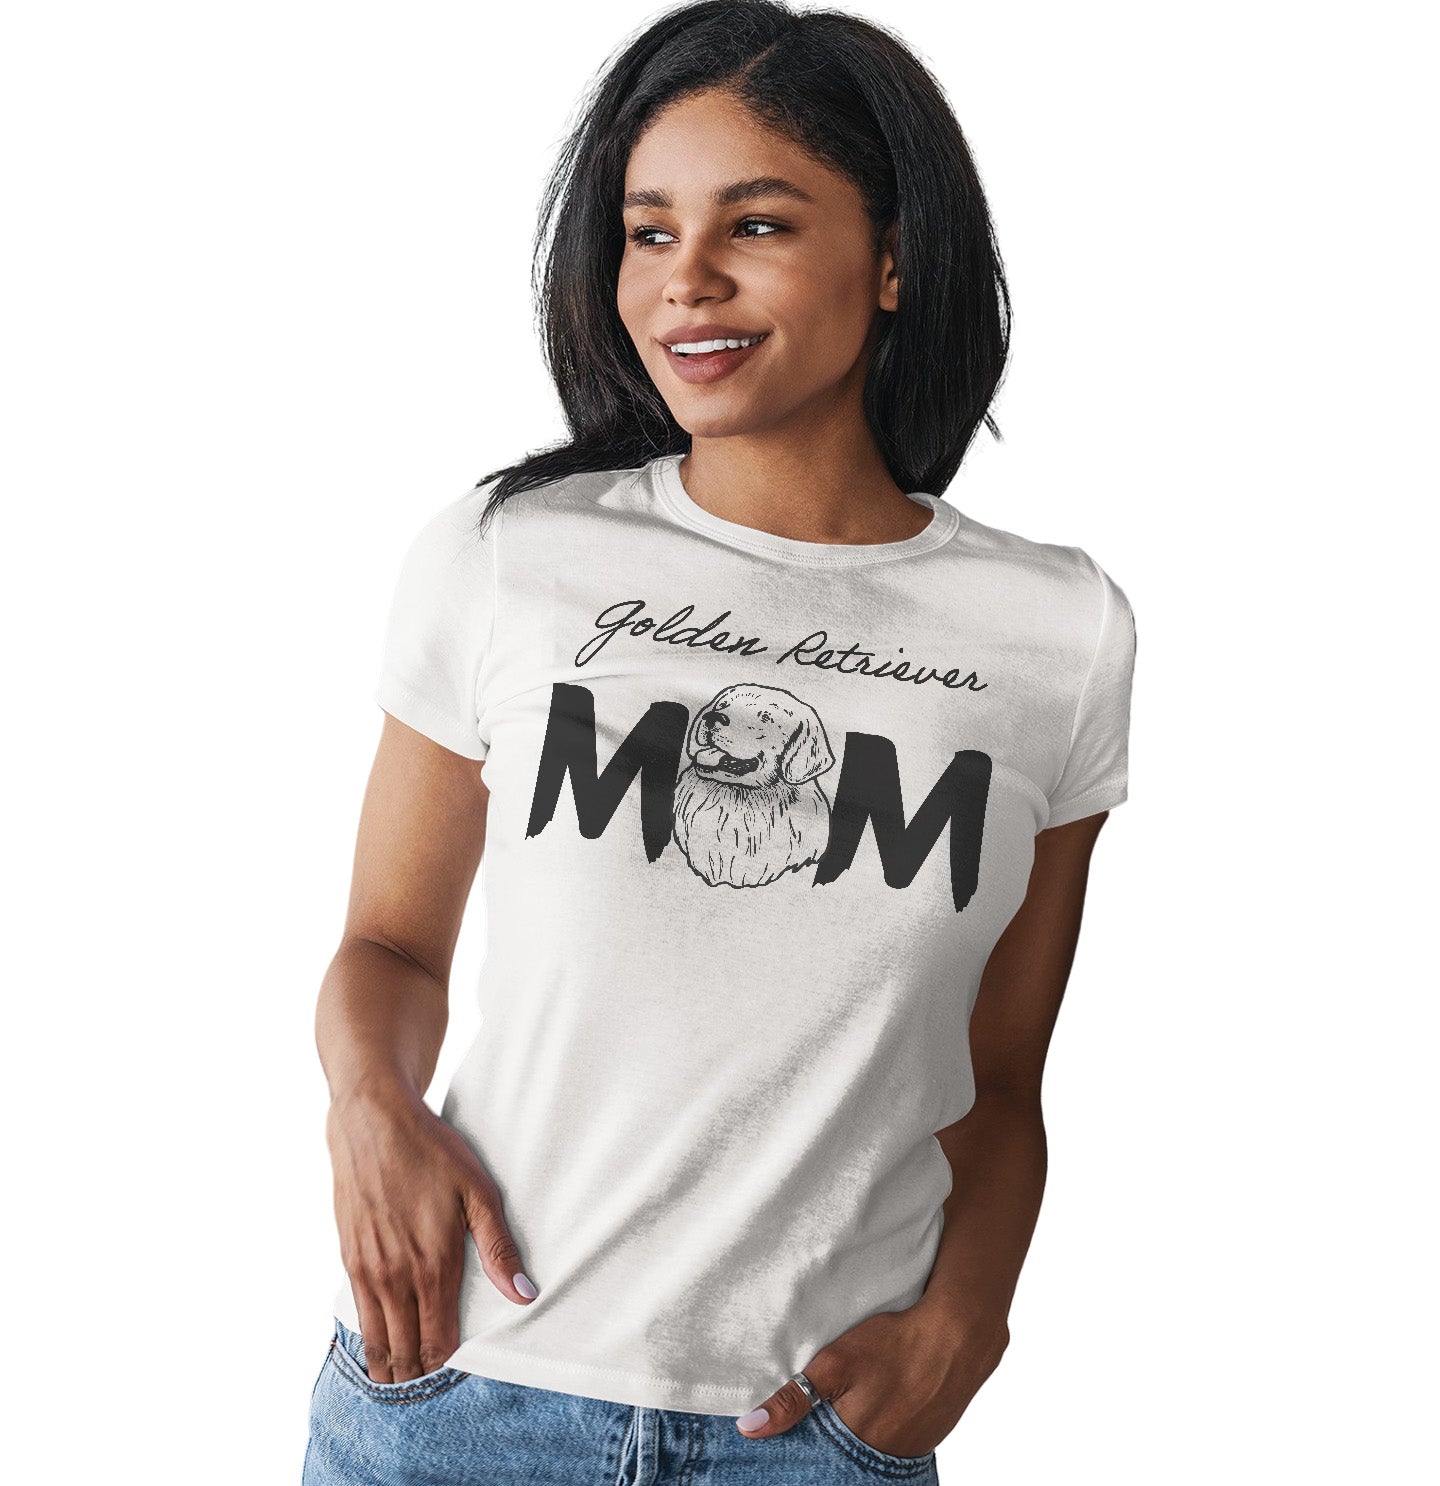 Golden Retriever Breed Mom - Women's Fitted T-Shirt